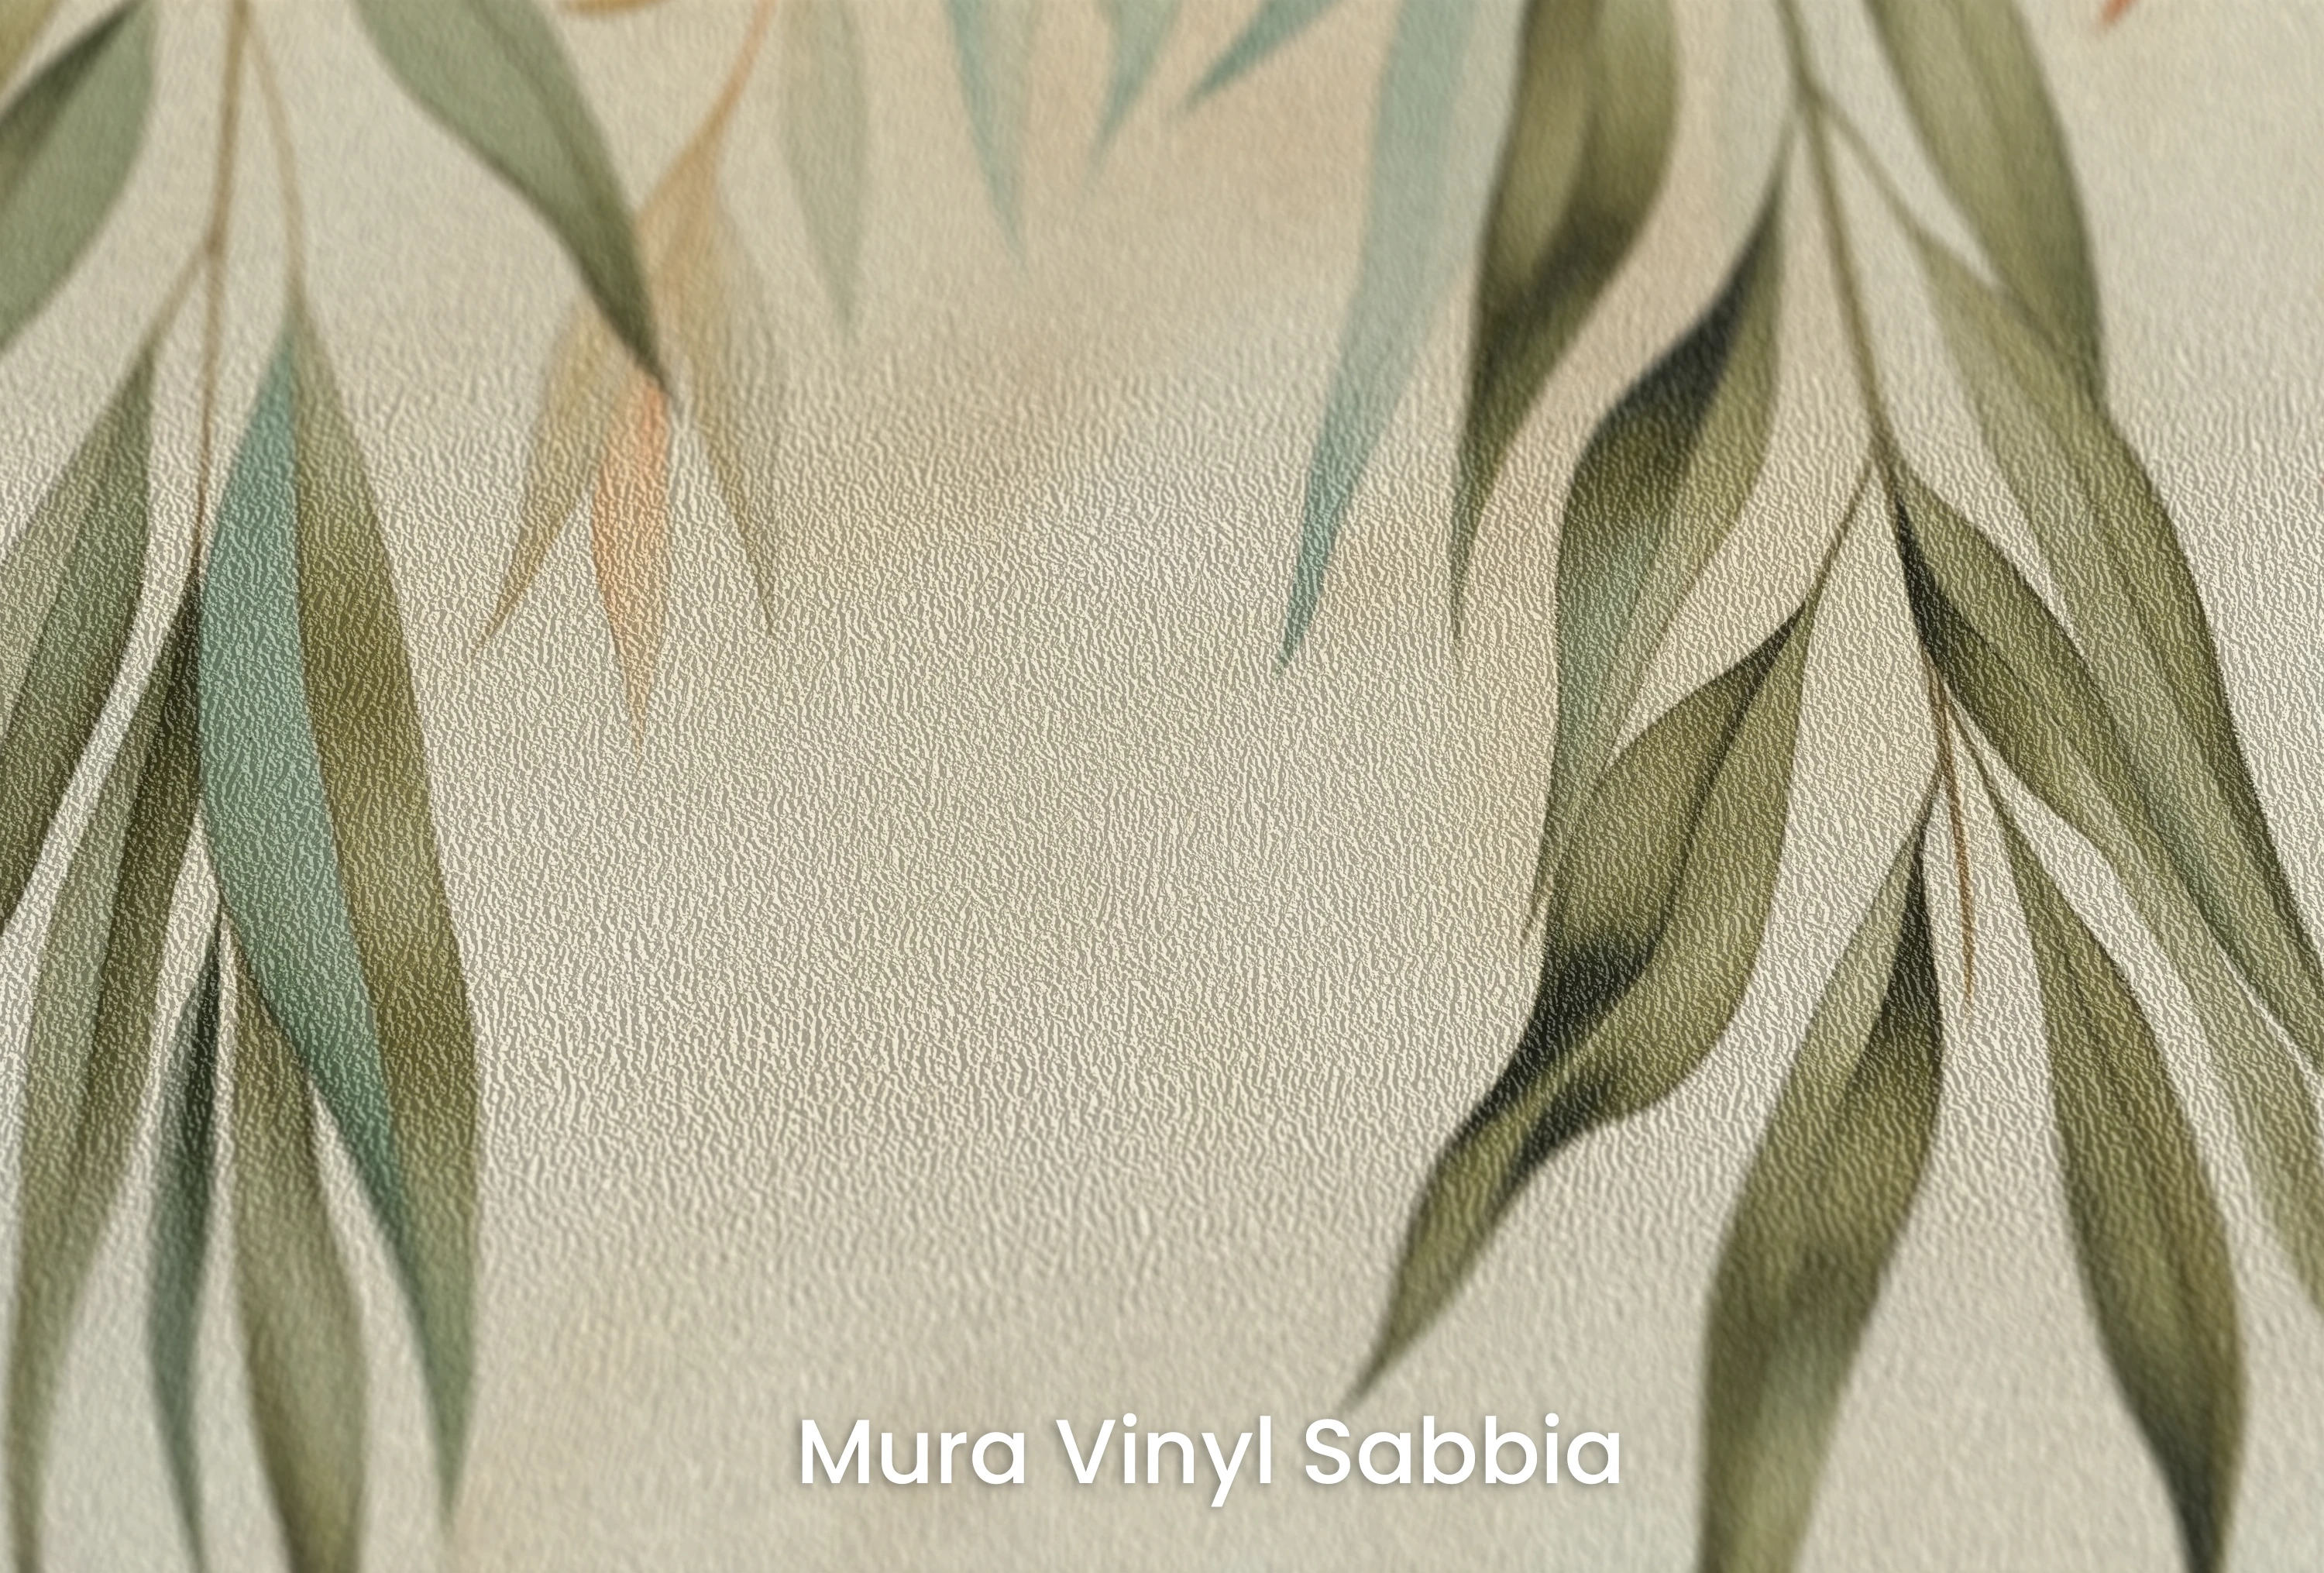 Photo wallpaper pattern printed on "Mura Vinyl Sabbia" substrate